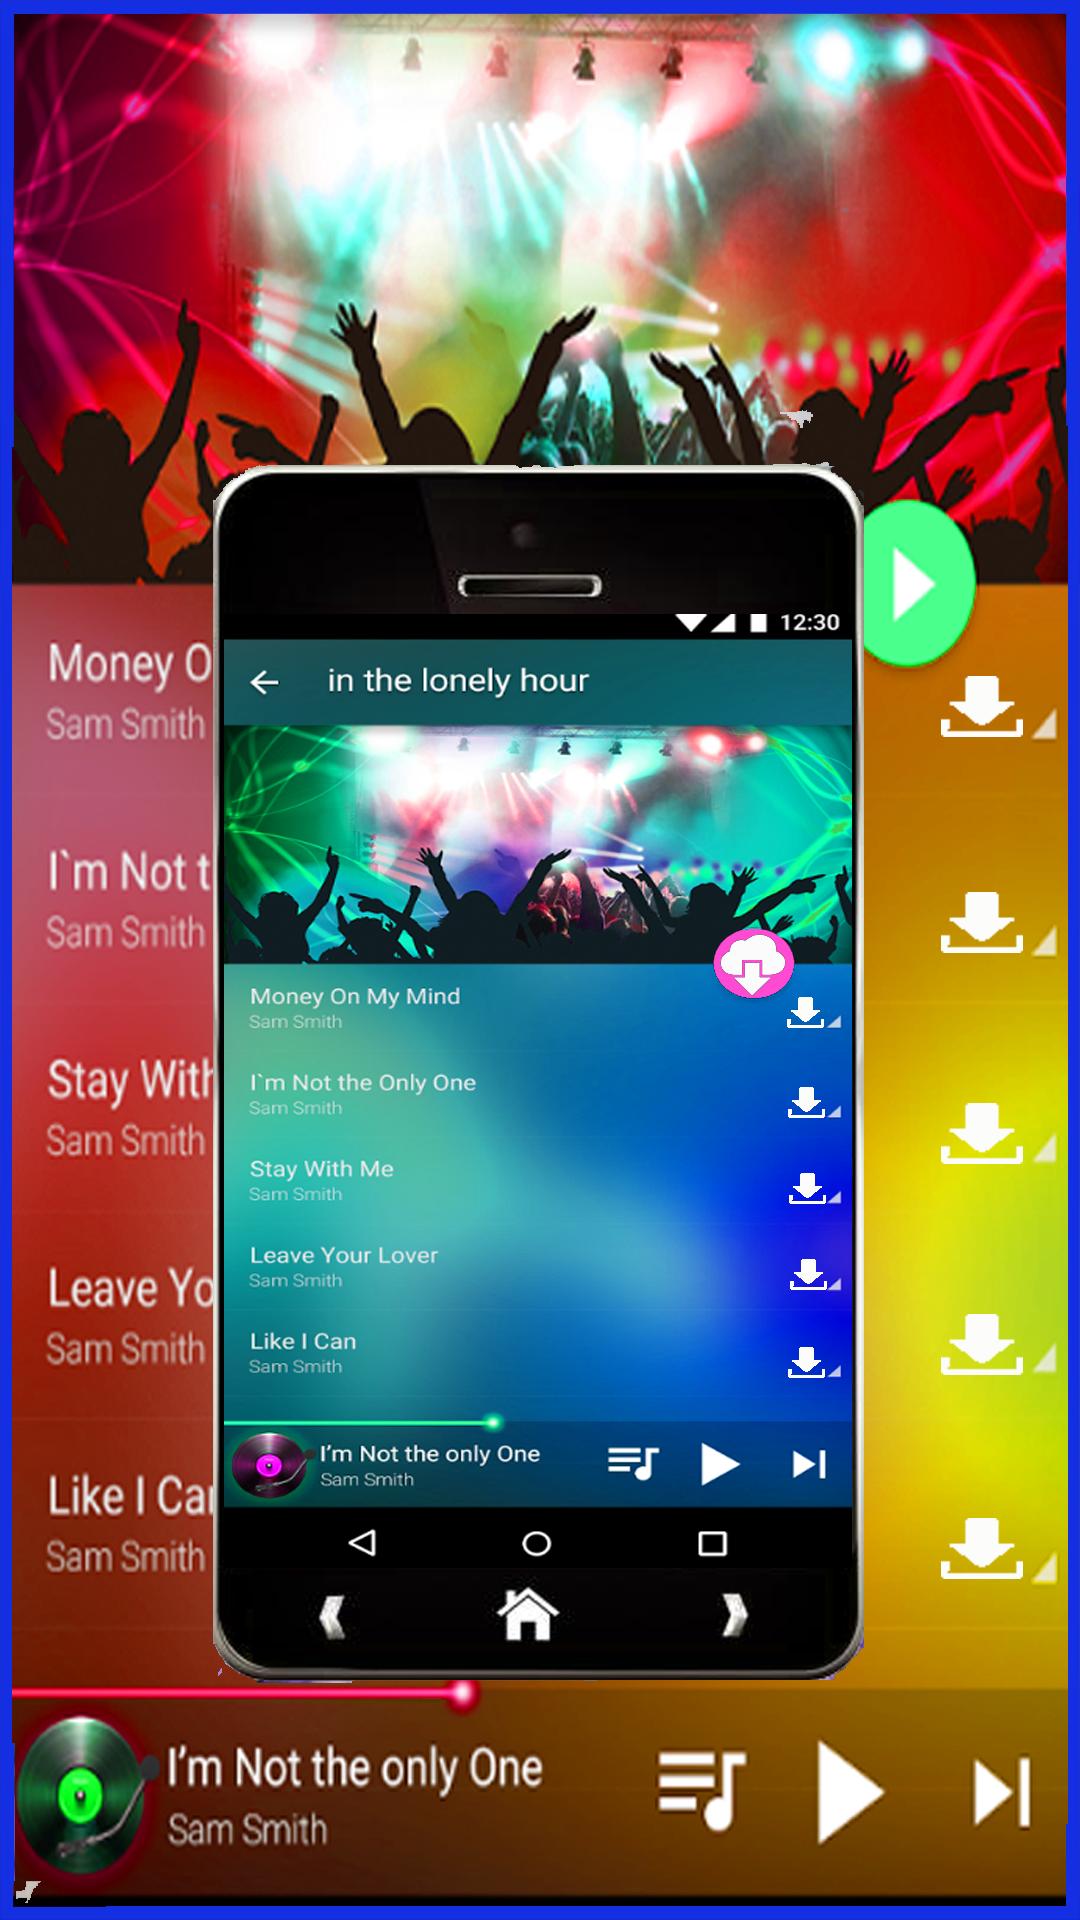 تحميل اغاني Mp3 مجانا وبسرعة For Android Apk Download